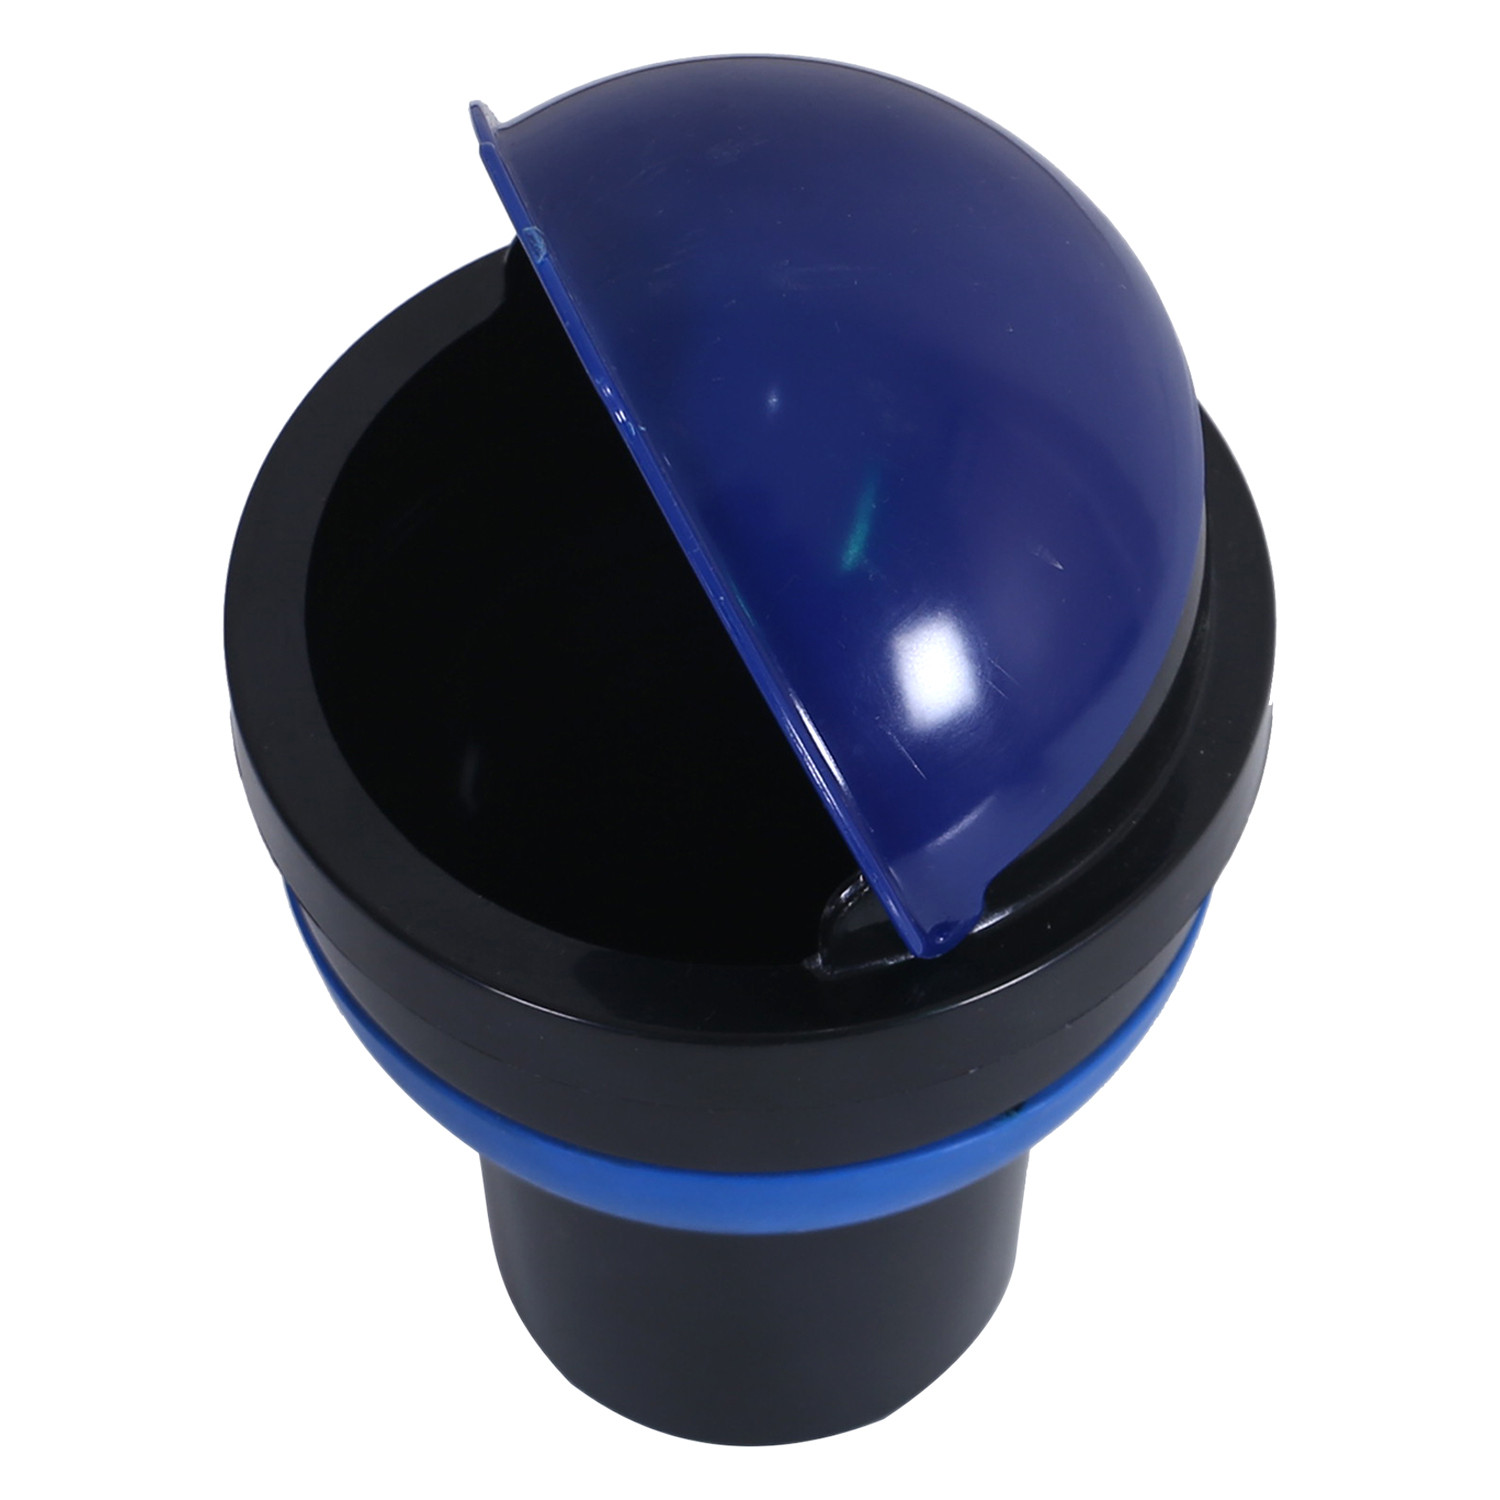 Kuber Industries Car Dustbin|Car Mini Dustbin With Lid|Leakproof Compact Small Dustbin|BLACK